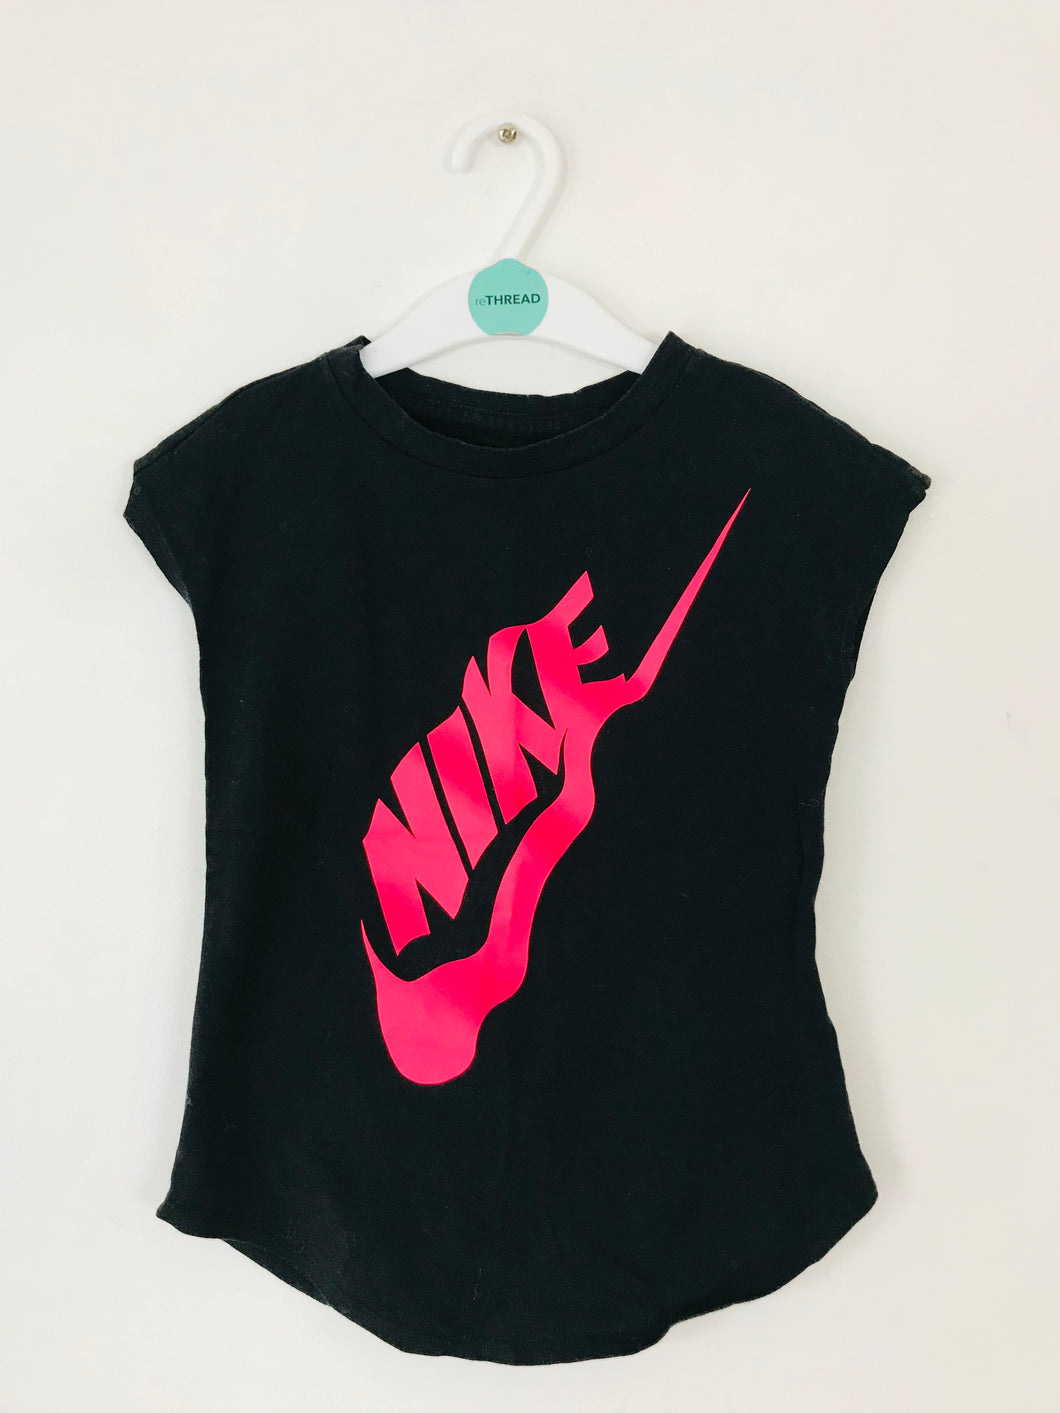 Nike Girl’s Graphic Sports Tee T-Shirt | 5-6 Years | Black Pink